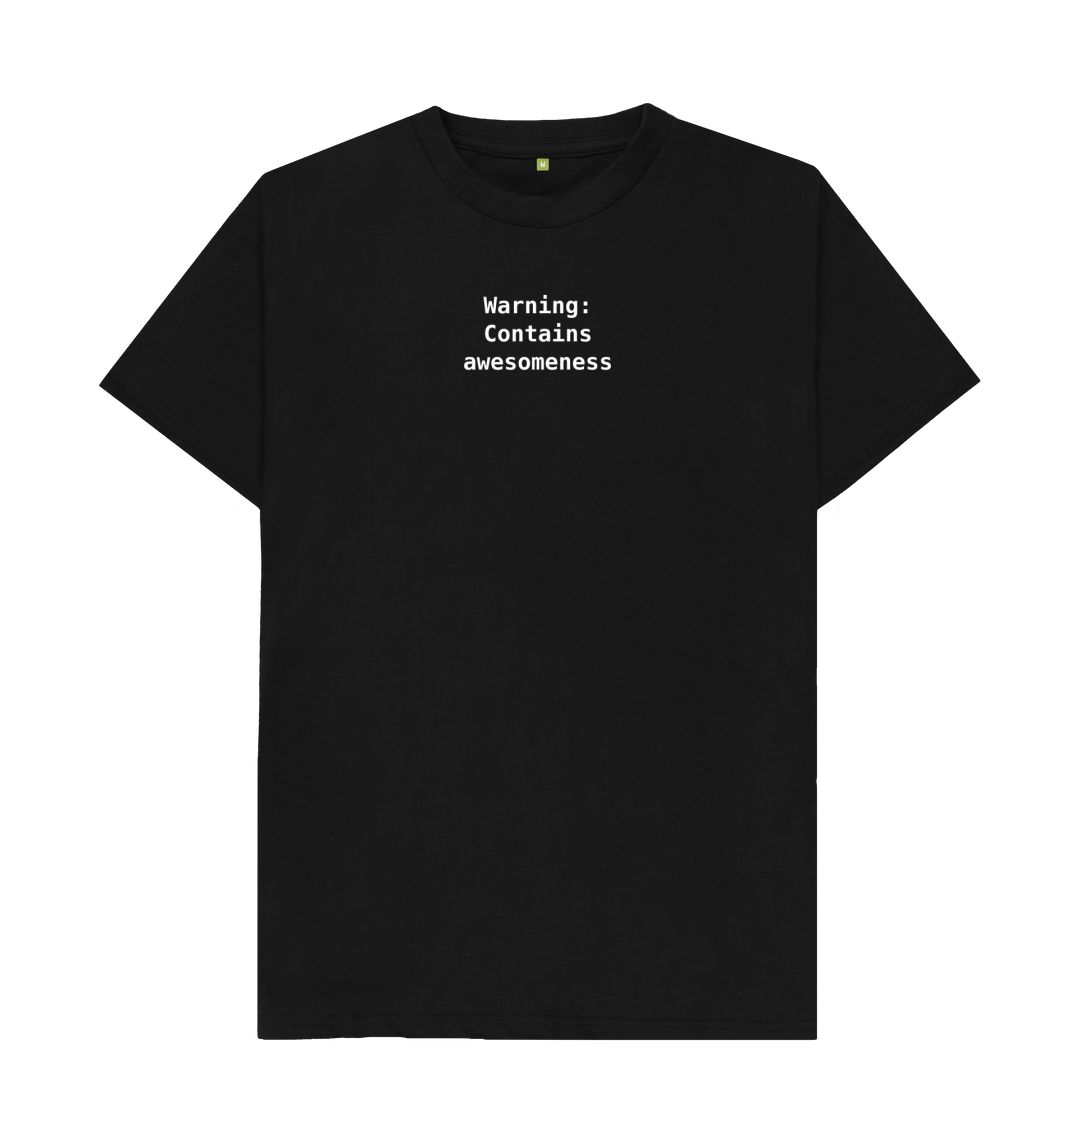 Black Warning: Contains awesomeness unisex T-shirt